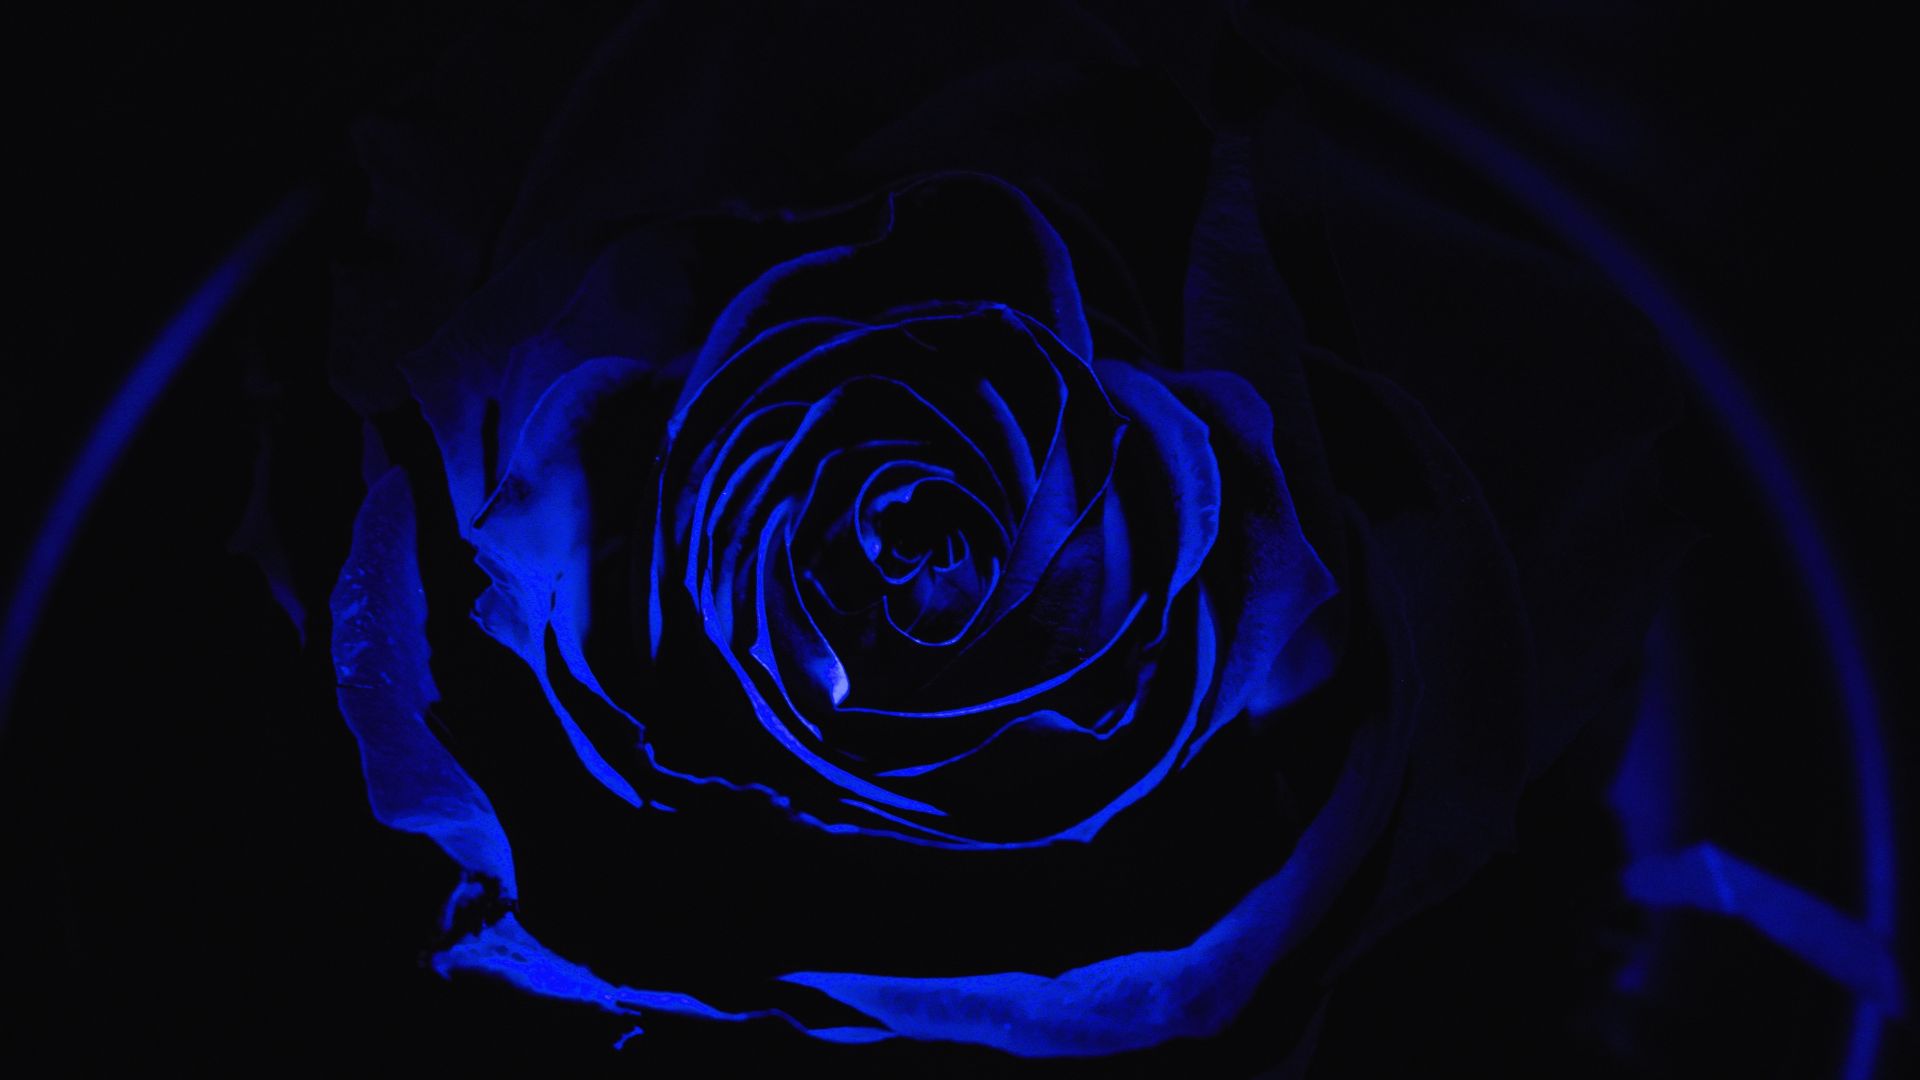 Blue rose, dark, close up wallpaper, HD image, picture, background, 7c50c0